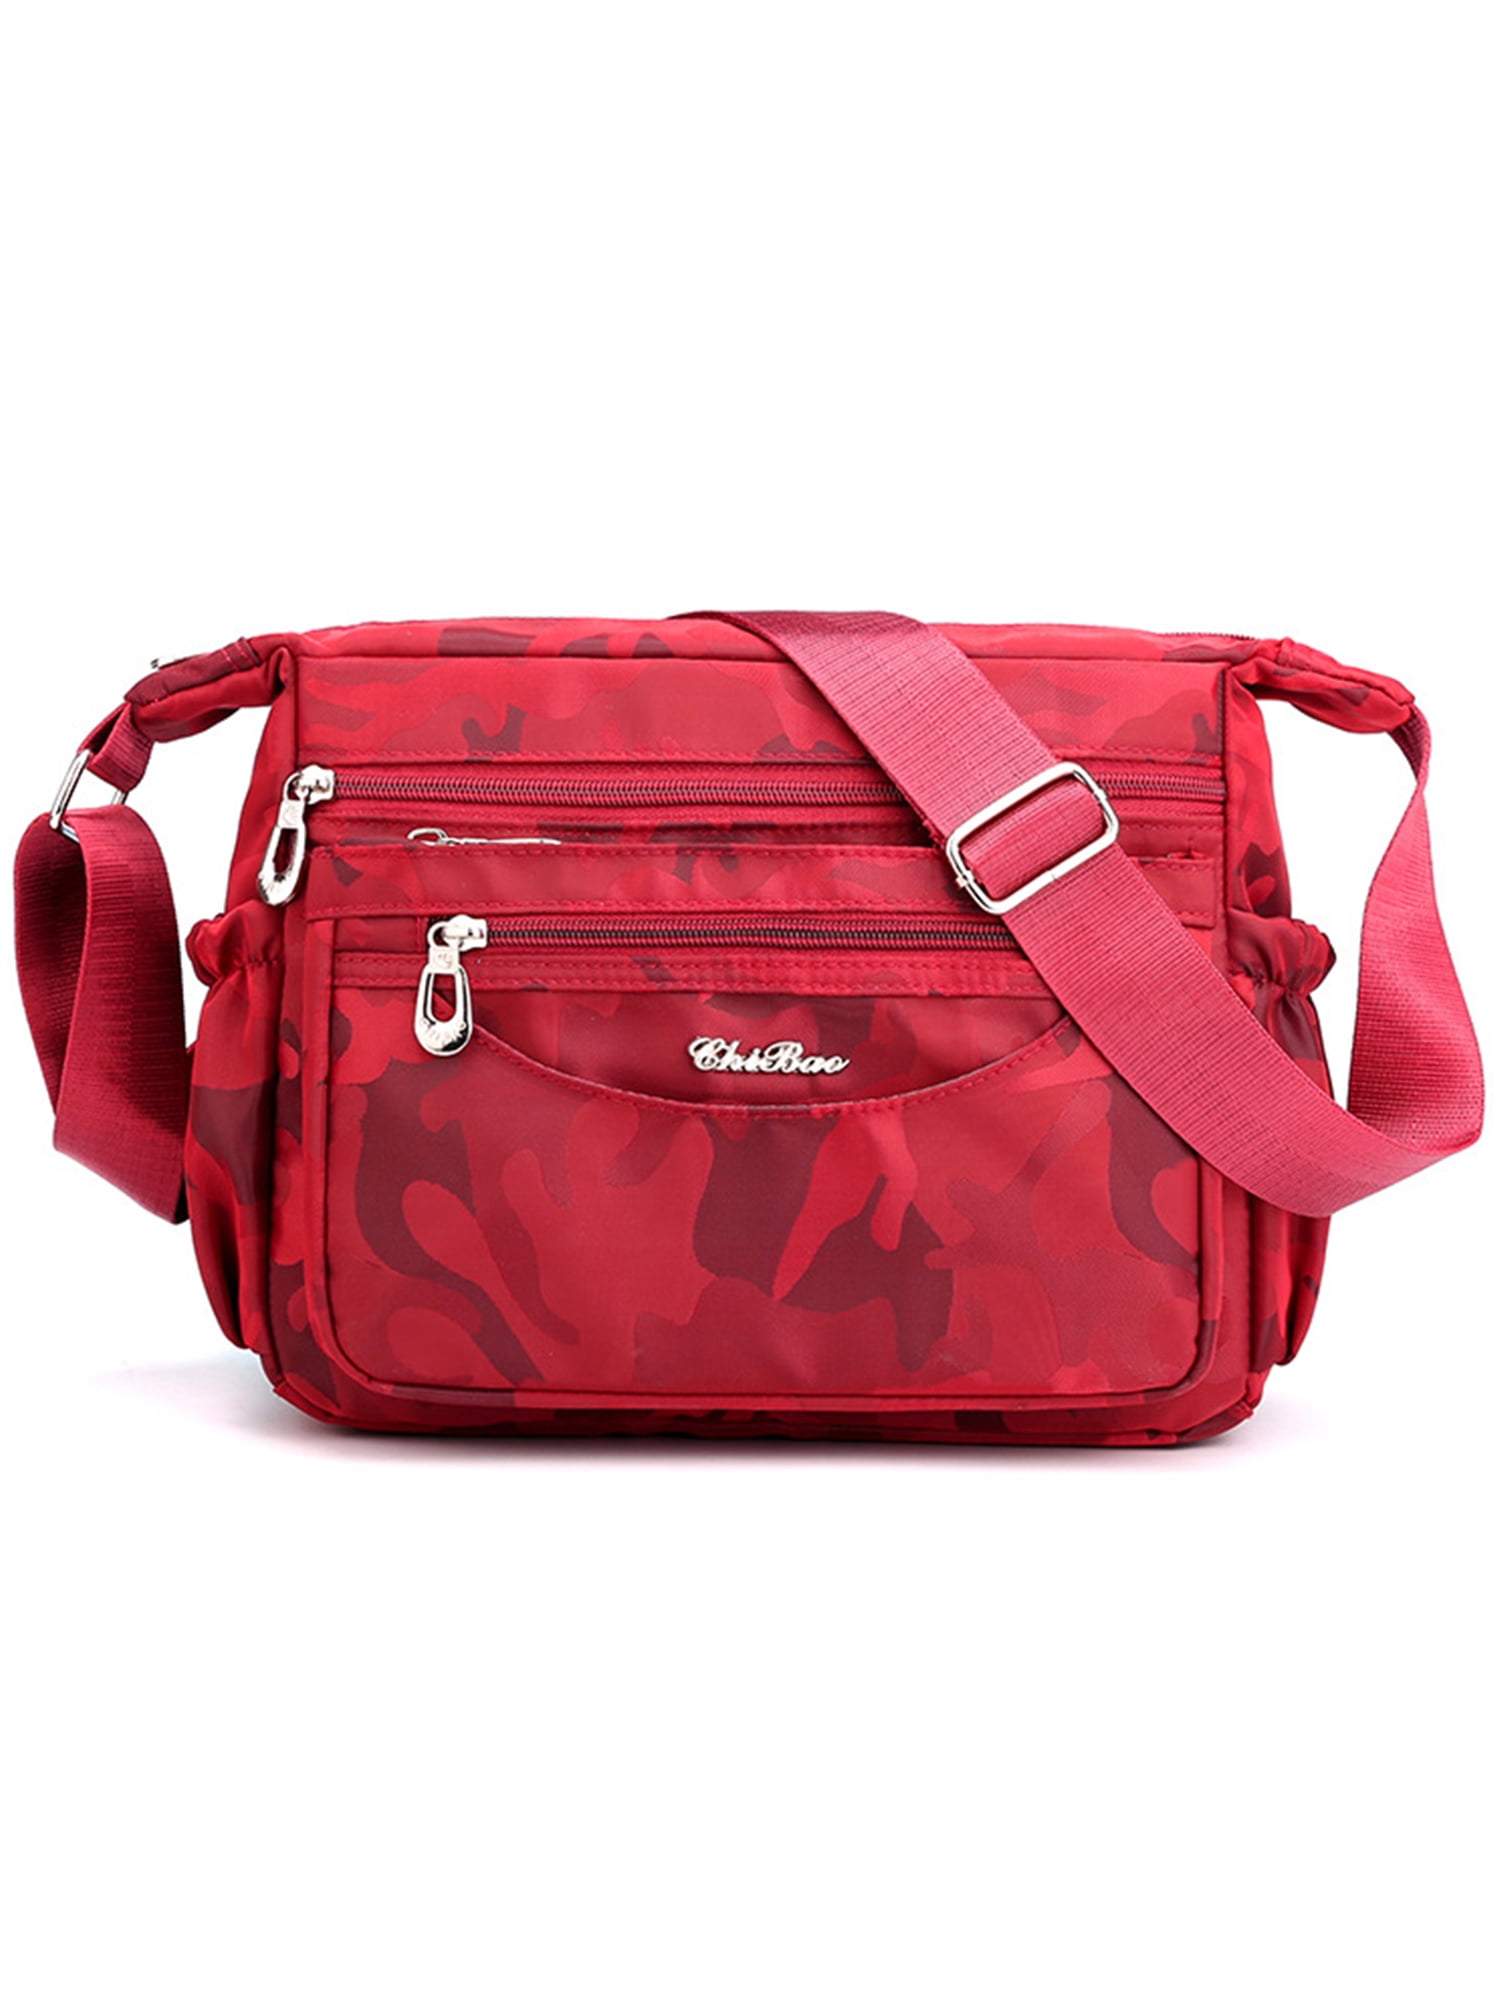 Avamo Women Crossbody Bags Adjustable Strap Handbag Large Capacity ...